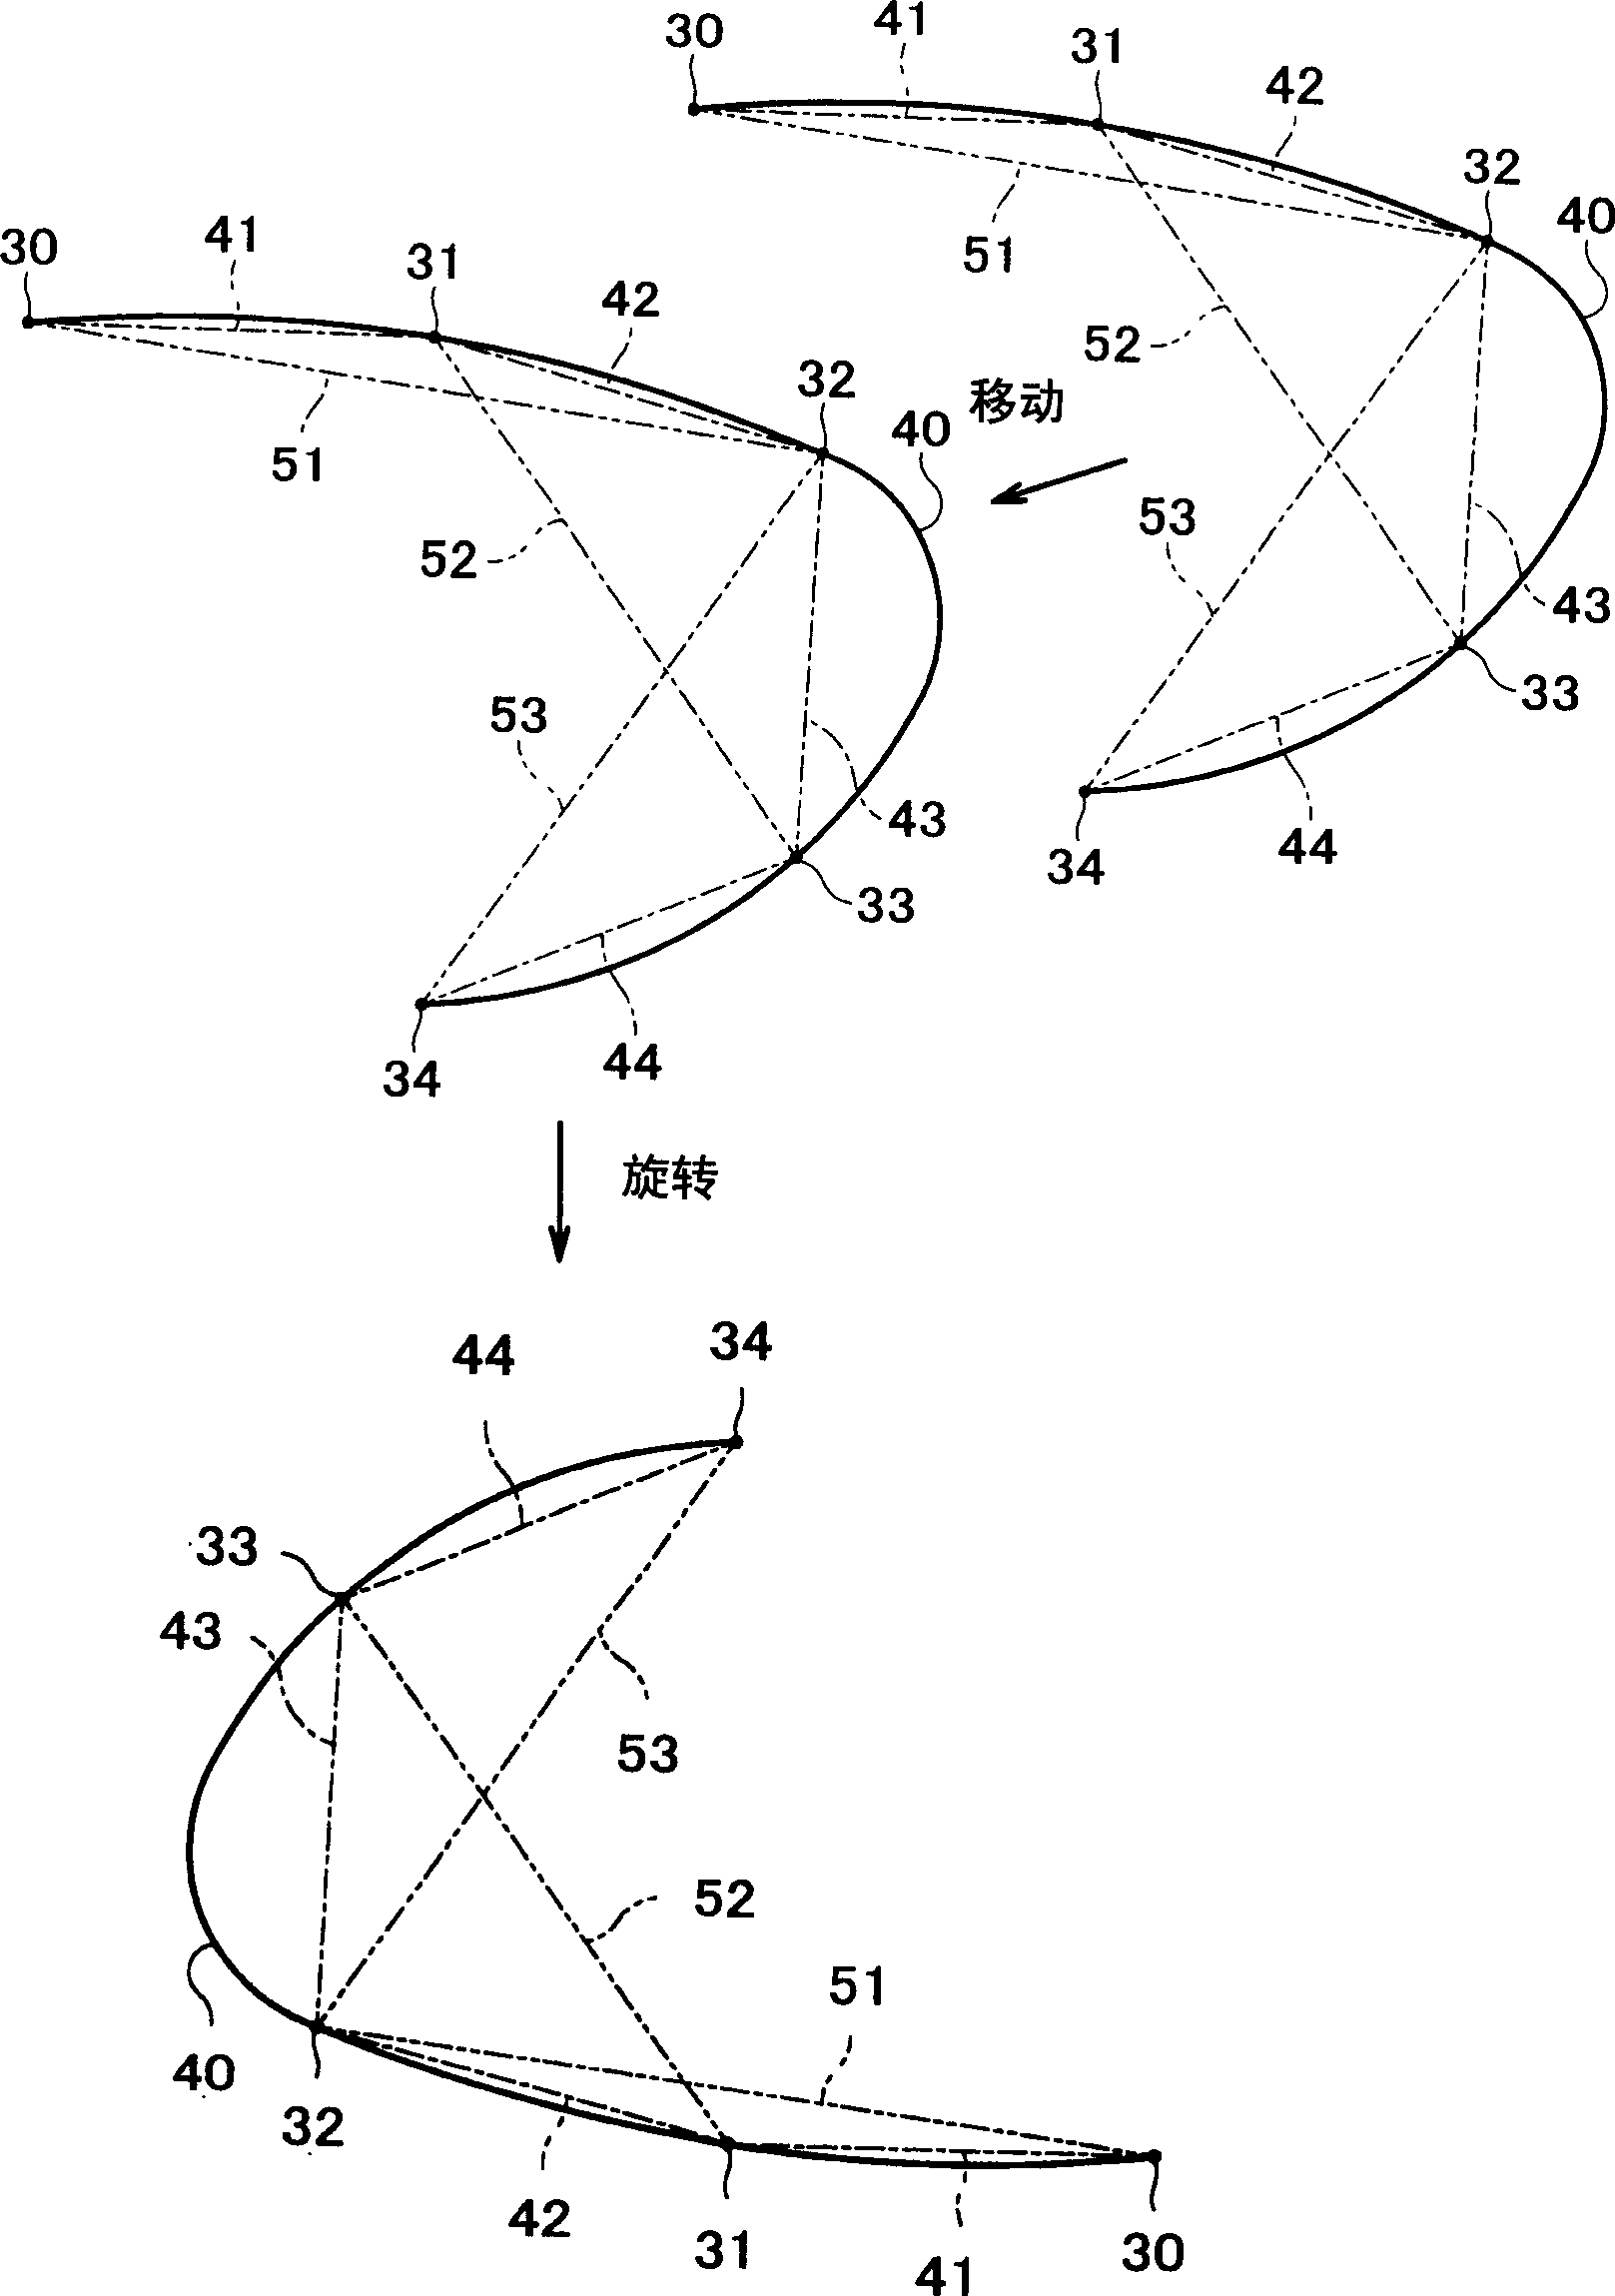 Curve identifying system